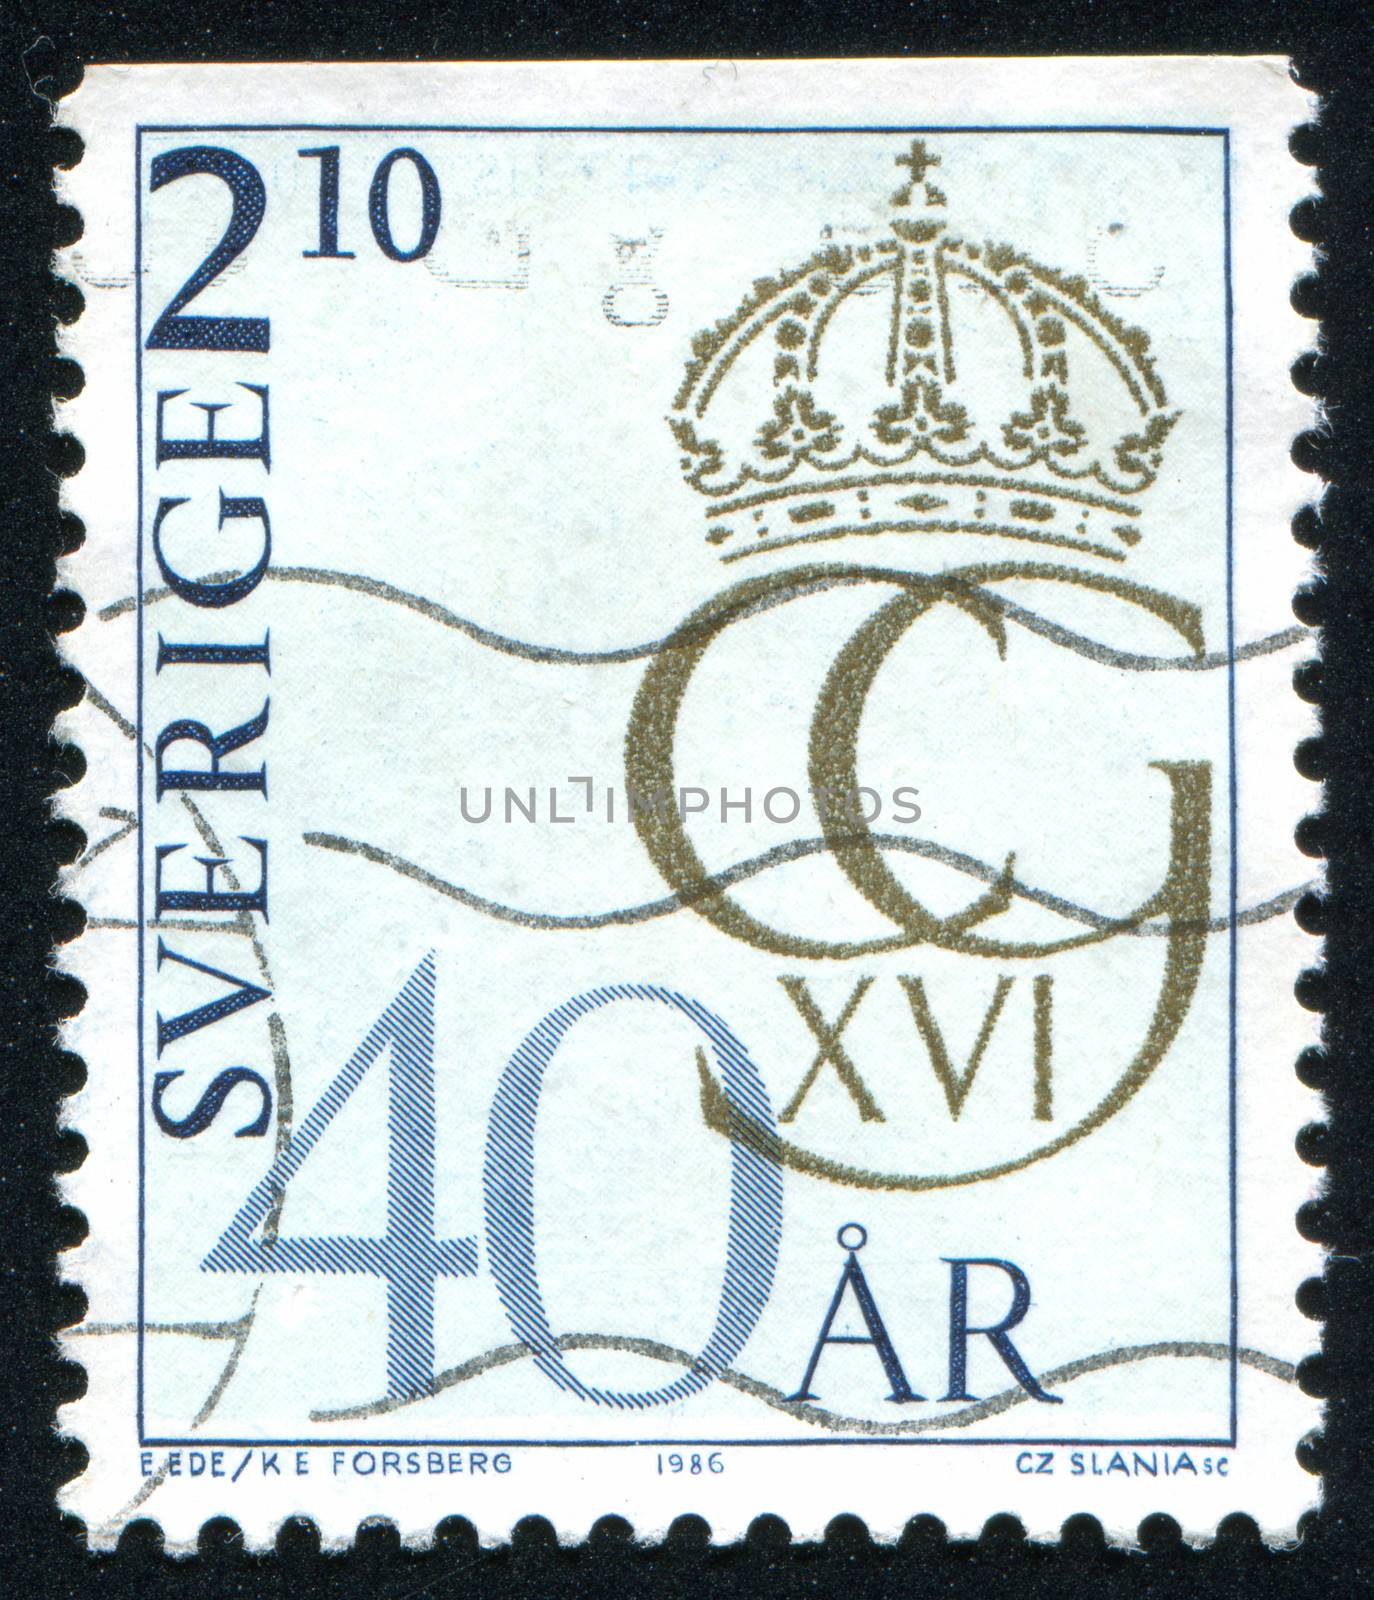 SWEDEN - CIRCA 1986: stamp printed by Sweden, shows Royal Cipher, circa 1986